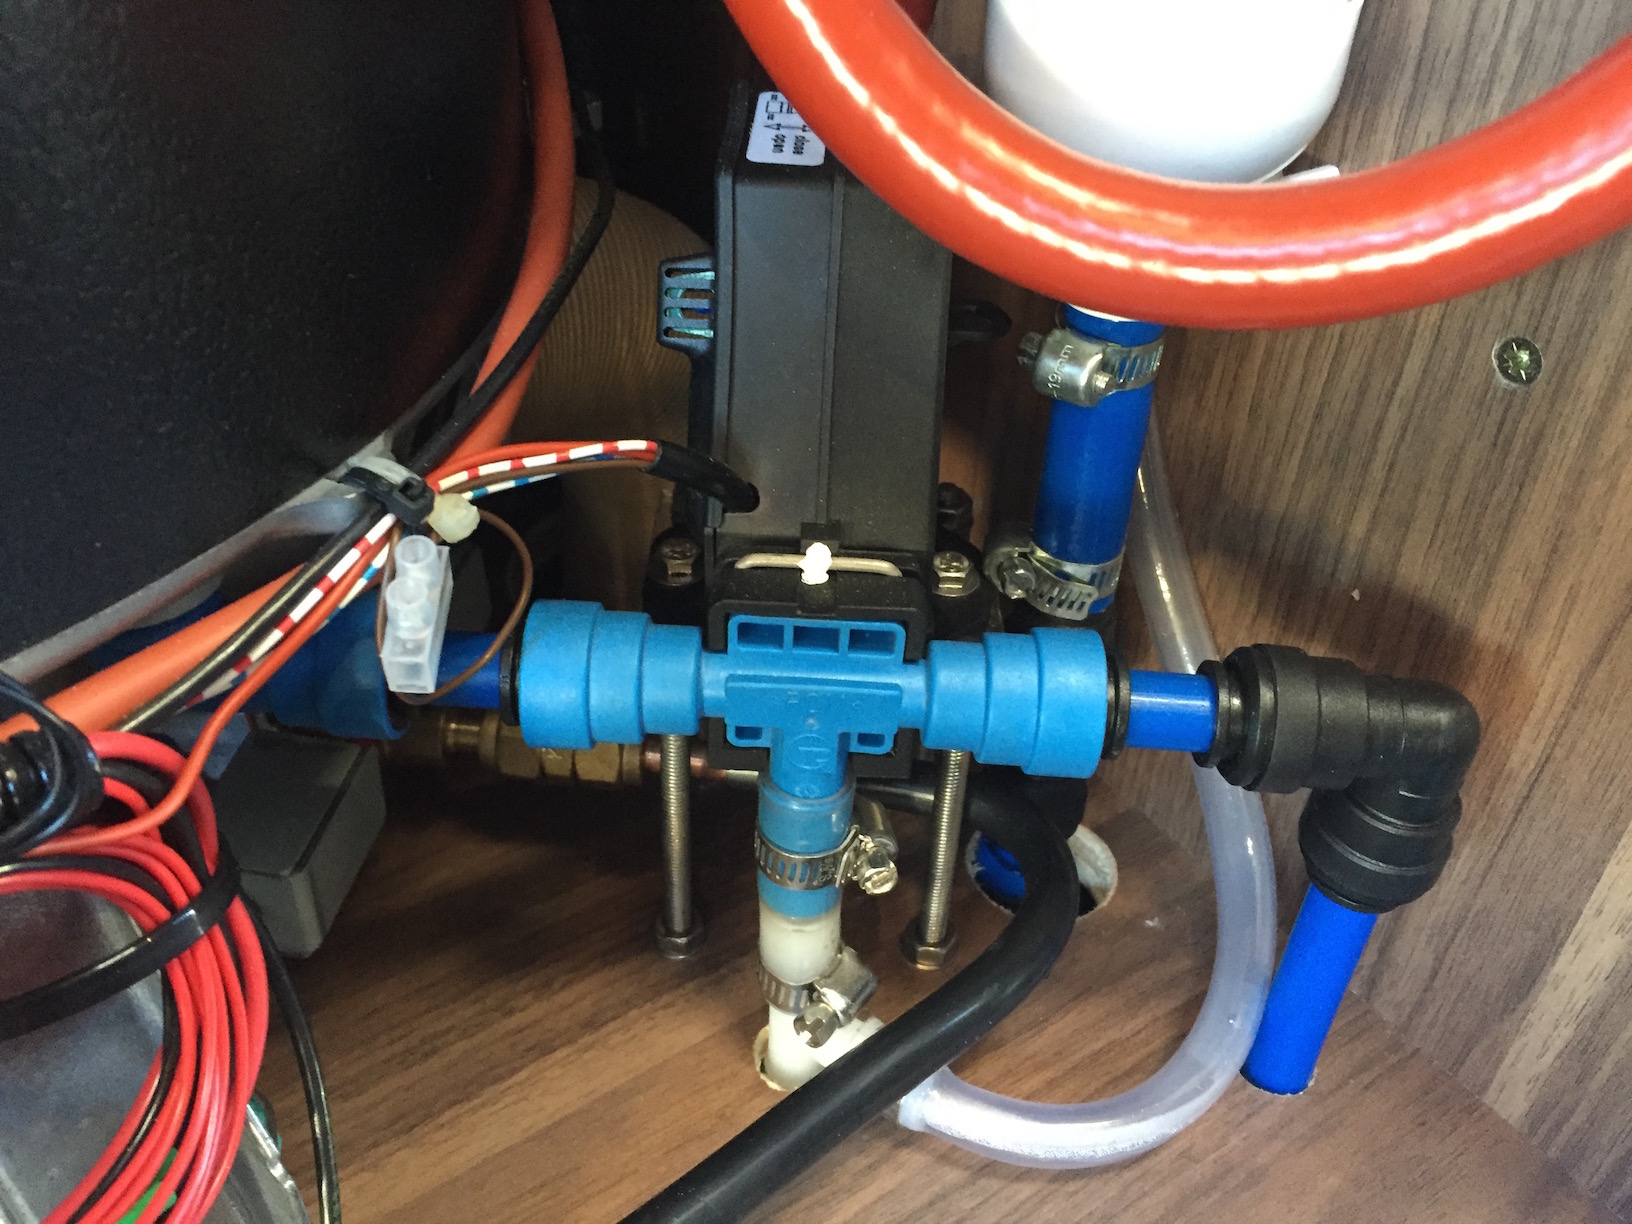 Drain valve assembly